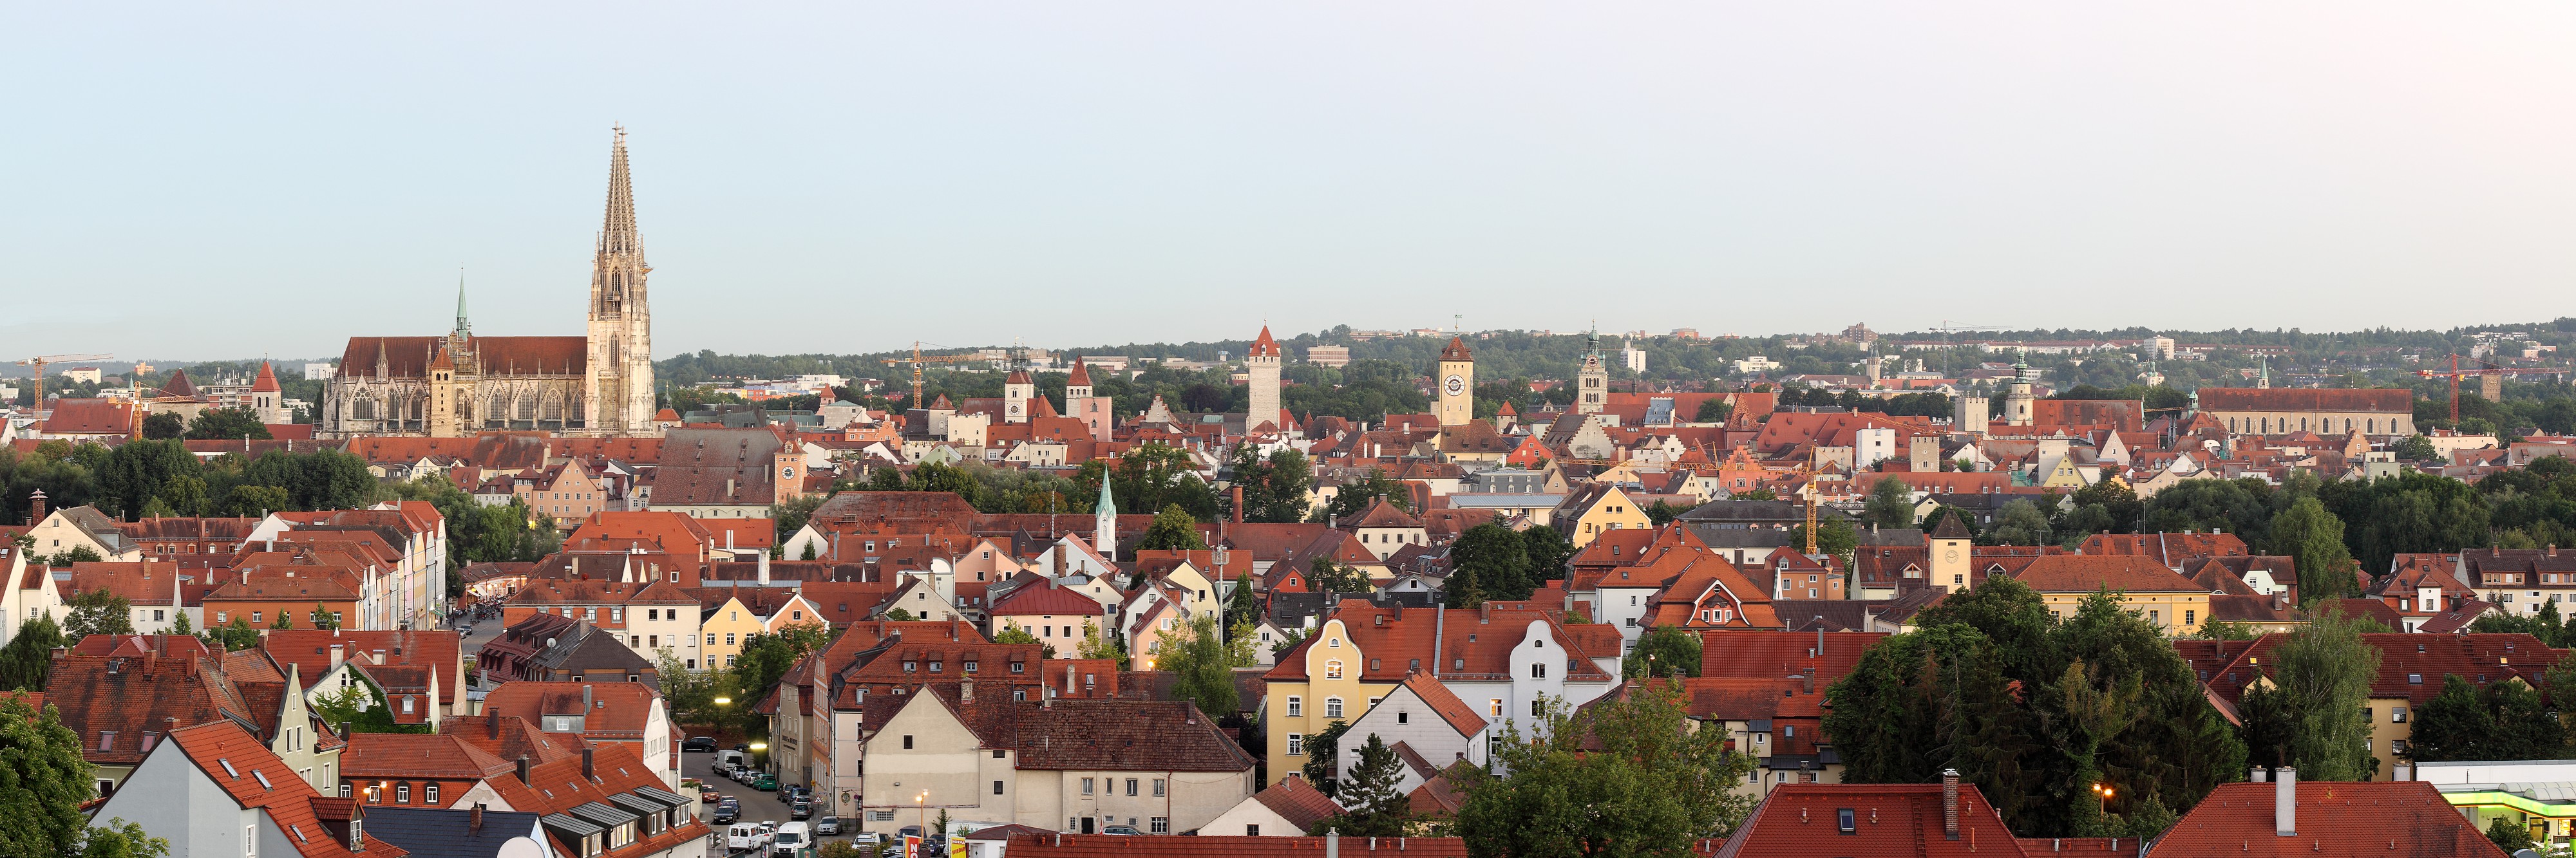 Regensburg-roofs